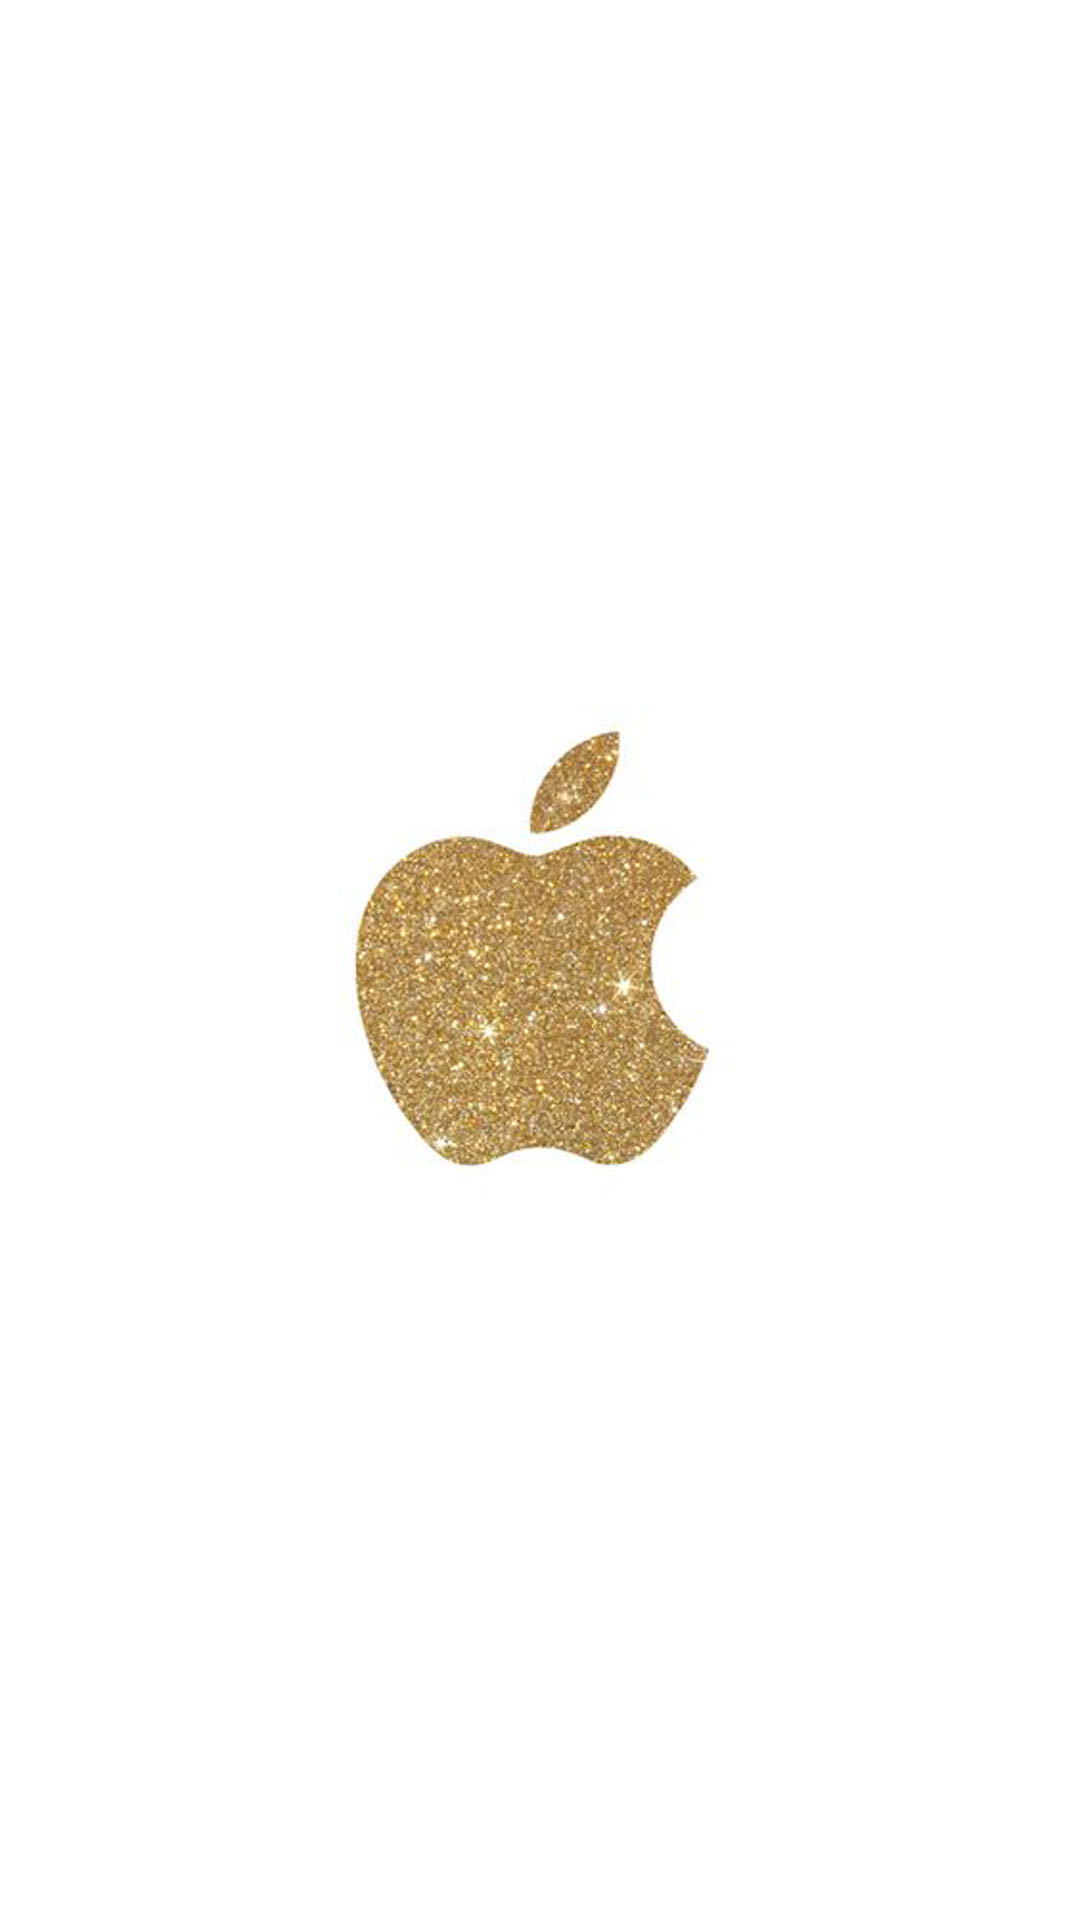 Wallpaper logo Apple fondo blanco | Ringtina